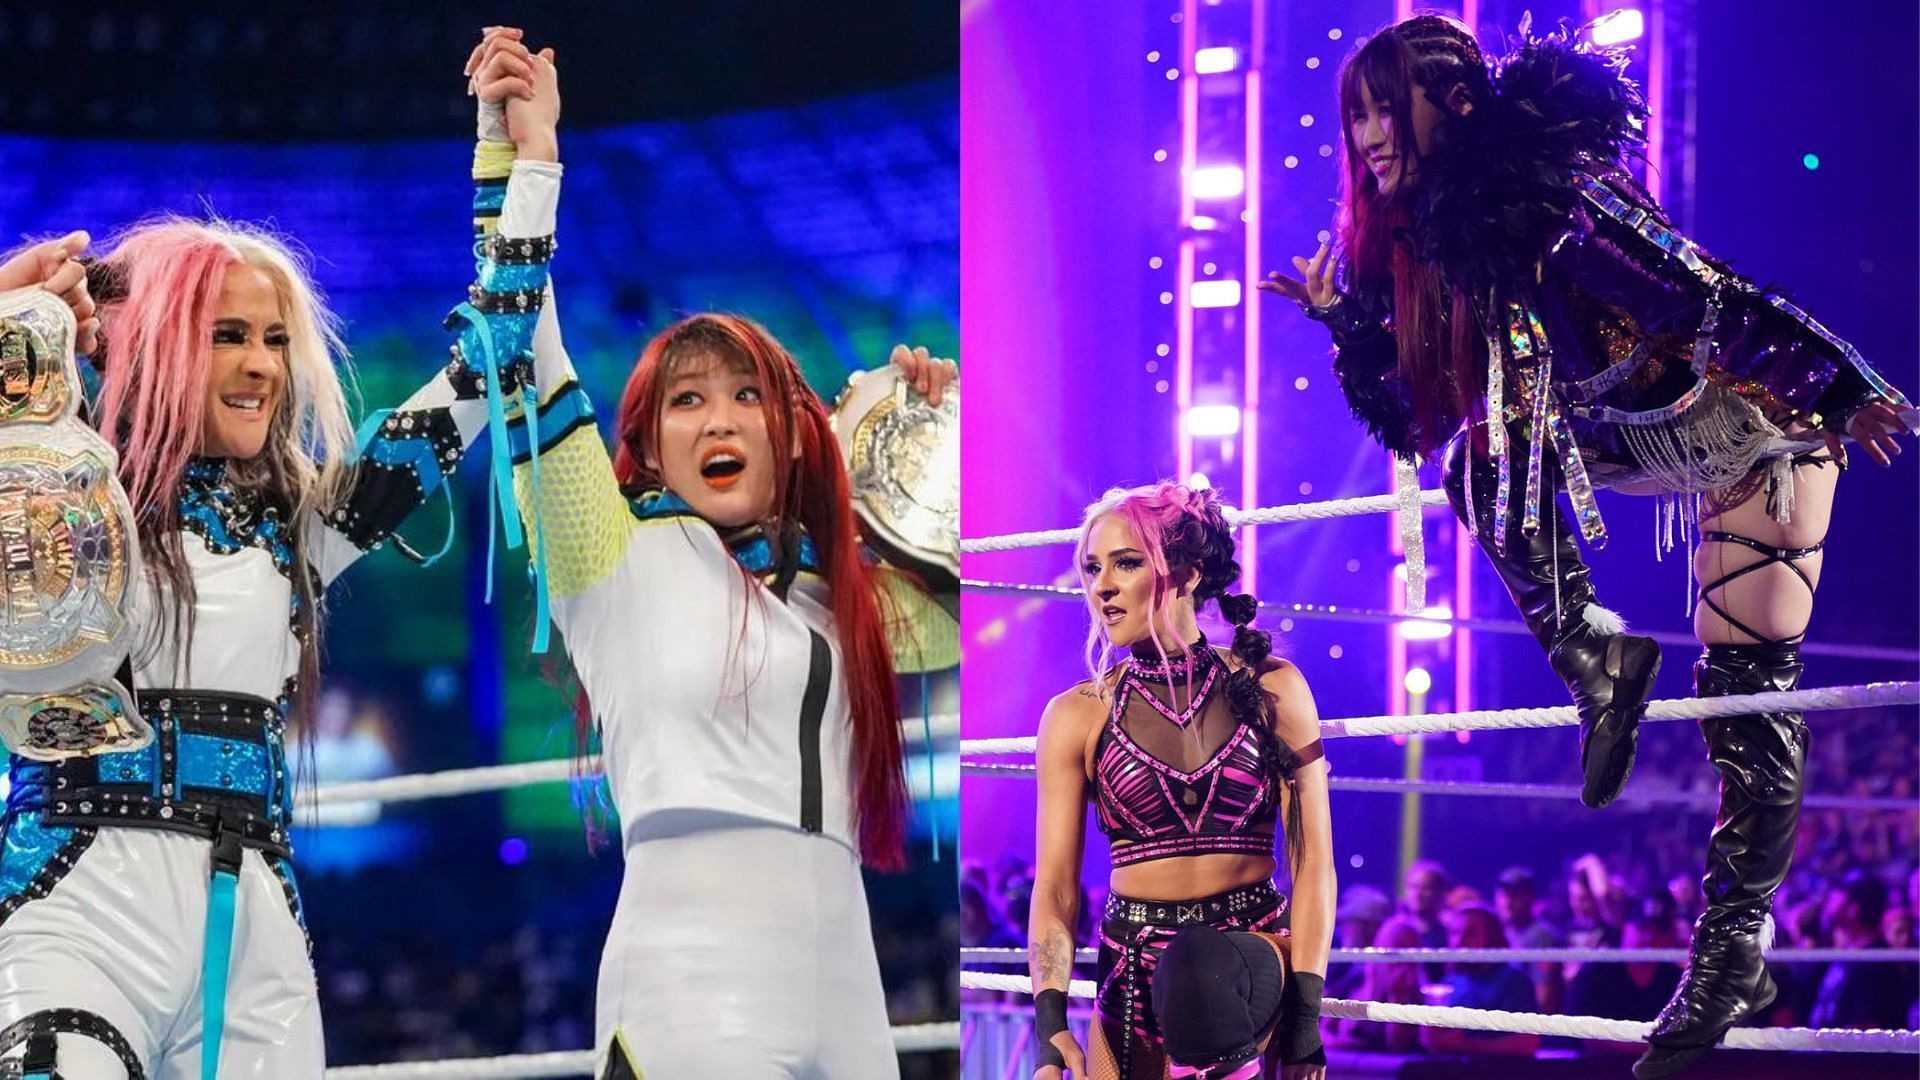 Dakota Kai and IYO SKY are two-time WWE Women